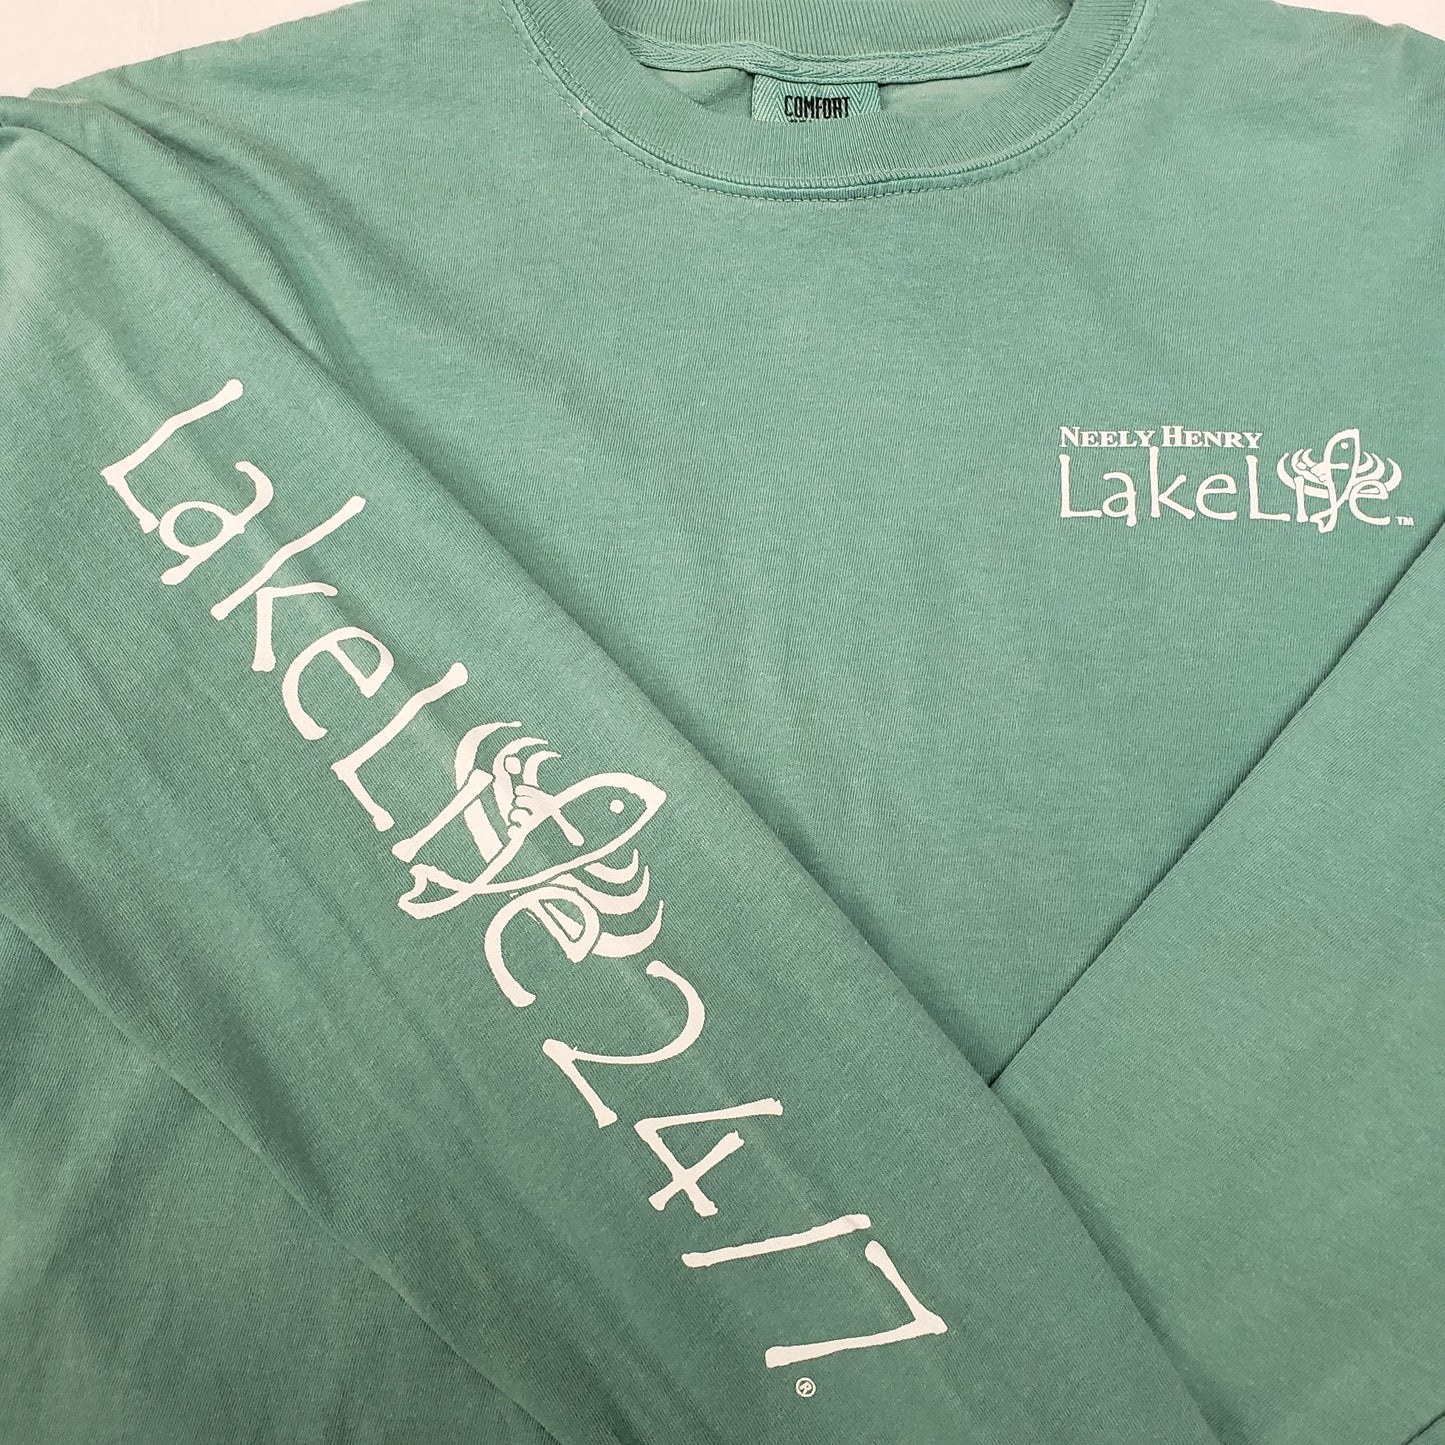 Lakelife LS Comfort Color Shirt Neely Henry